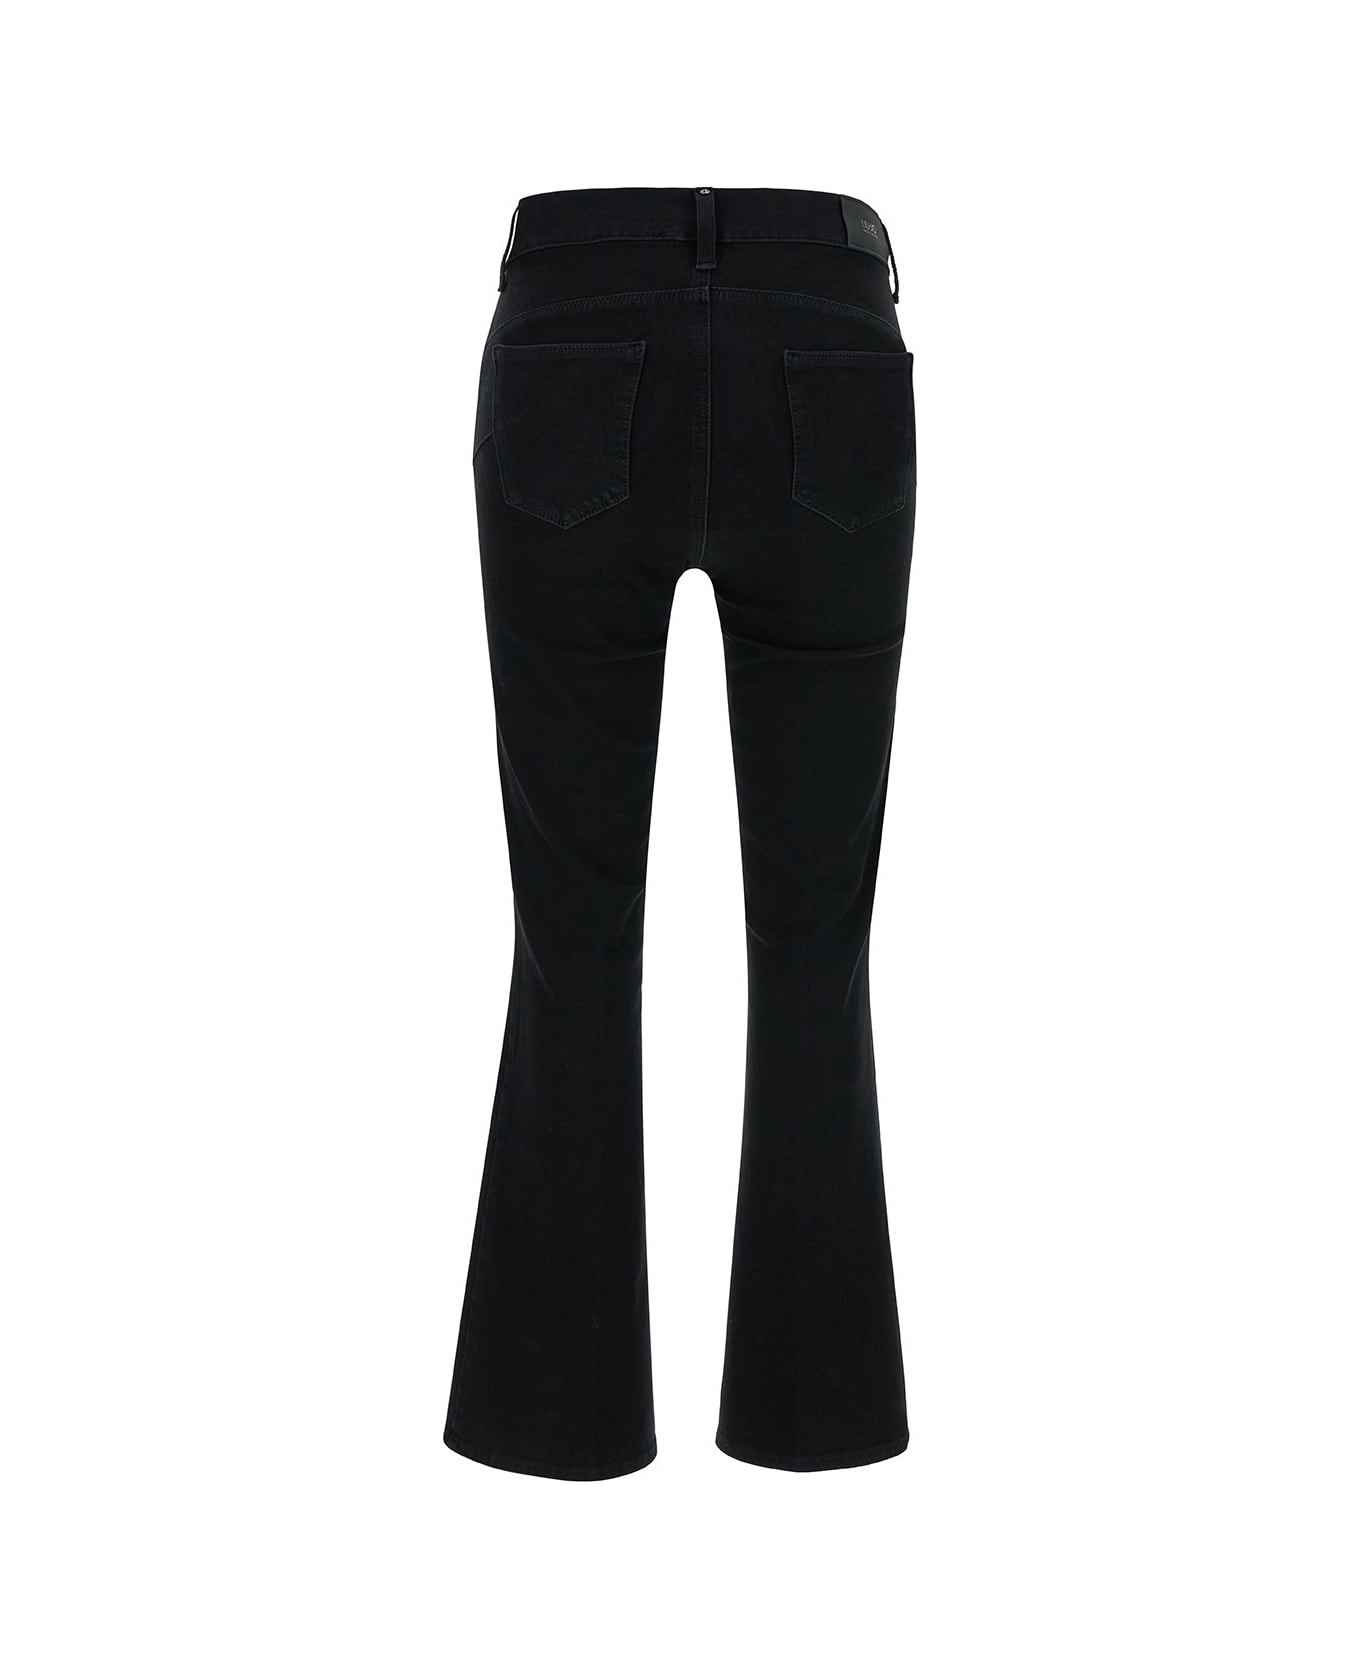 Liu-Jo Black Slightly Flared Five Pocket Jeans In Cotton Denim Woman - Black デニム